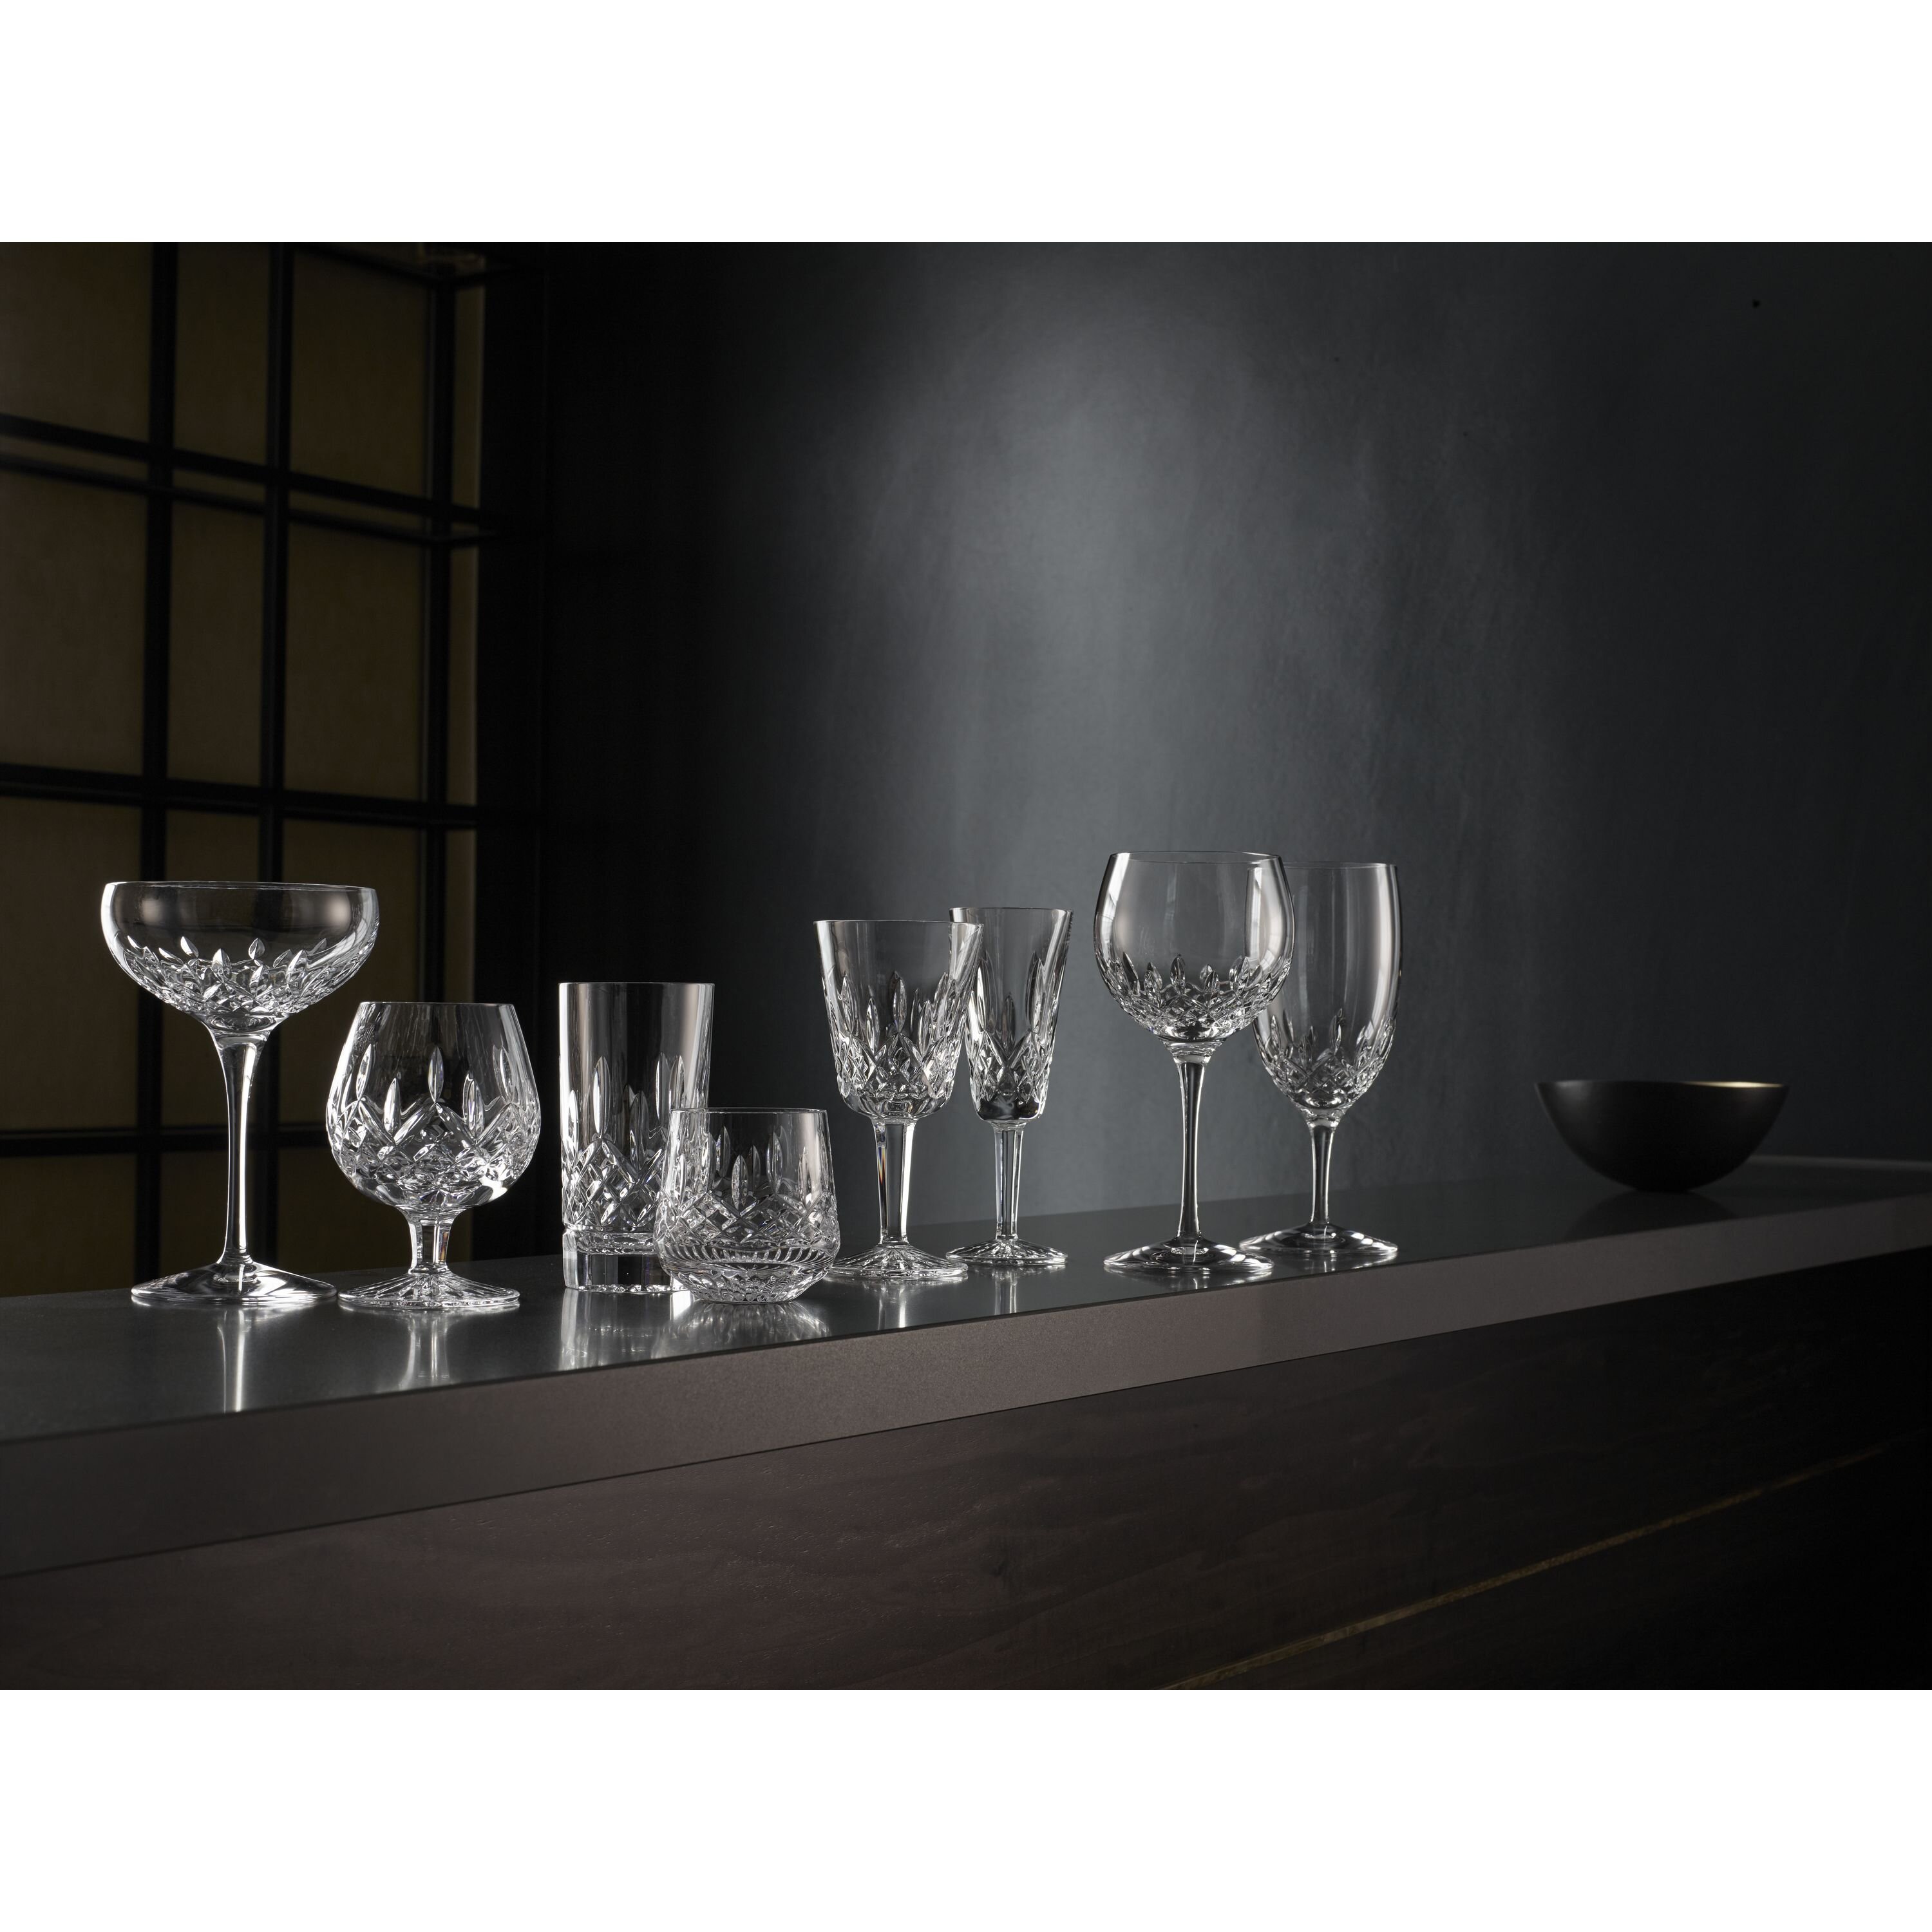 Waterford Elegance Martini Glass, Set of 2,10Fl oz